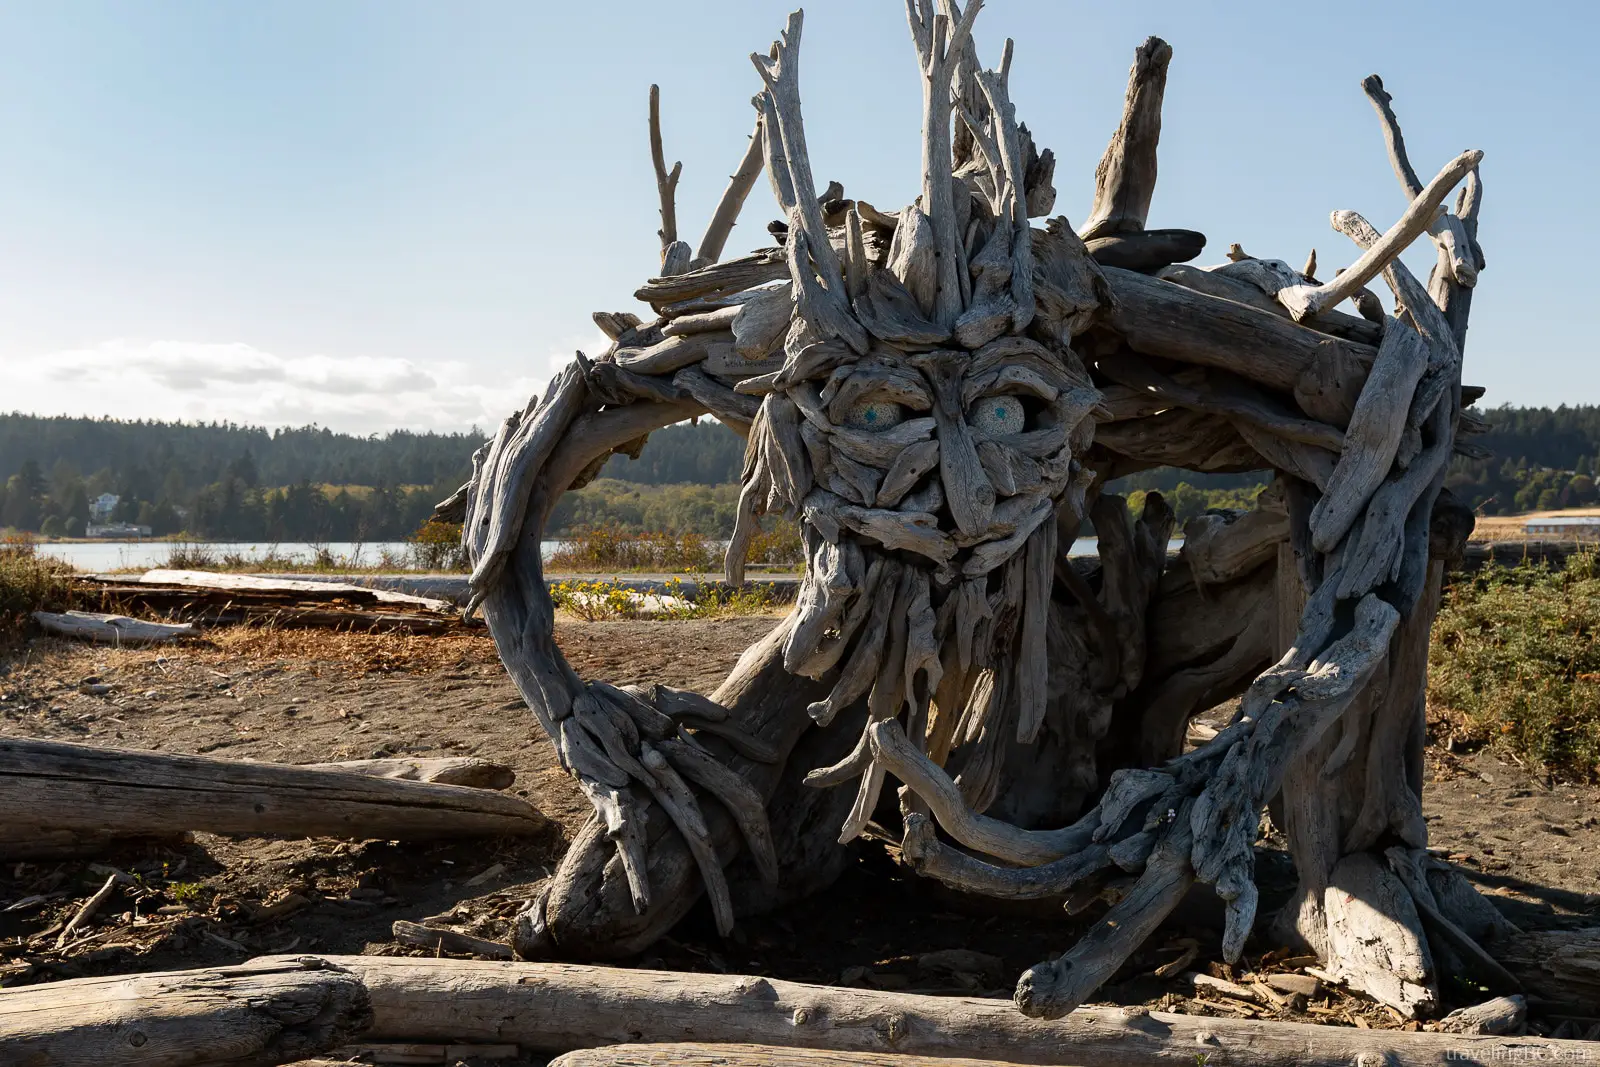 Esquimalt Lagoon driftwood sculpture - "McGnarly the Beach Ent"